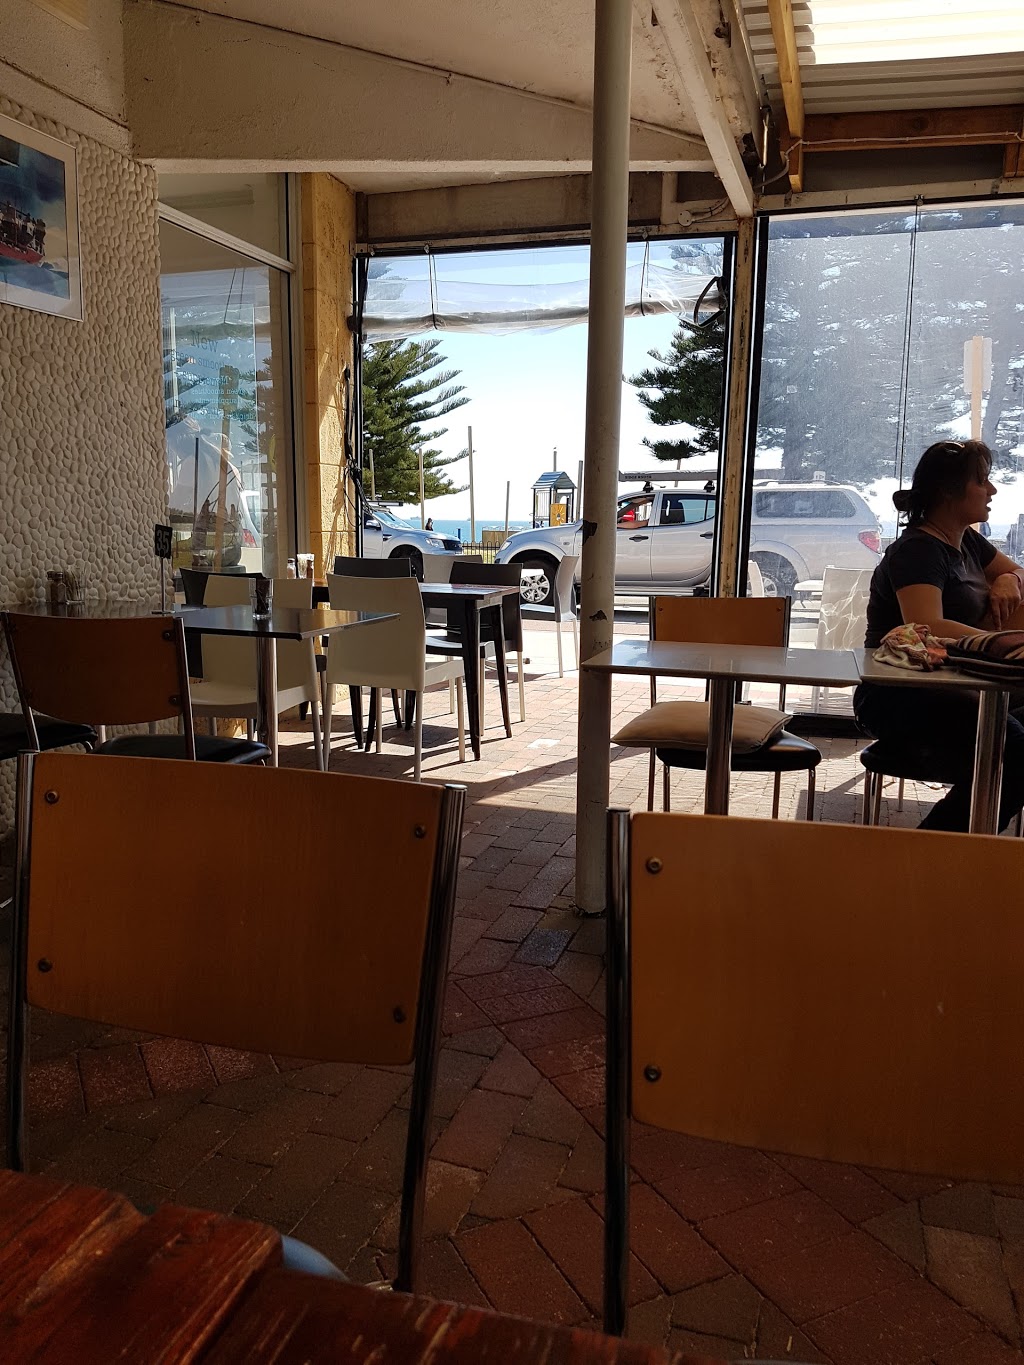 Beaches Cafe | cafe | 122 Marine Parade, Cottesloe WA 6011, Australia | 0893844412 OR +61 8 9384 4412